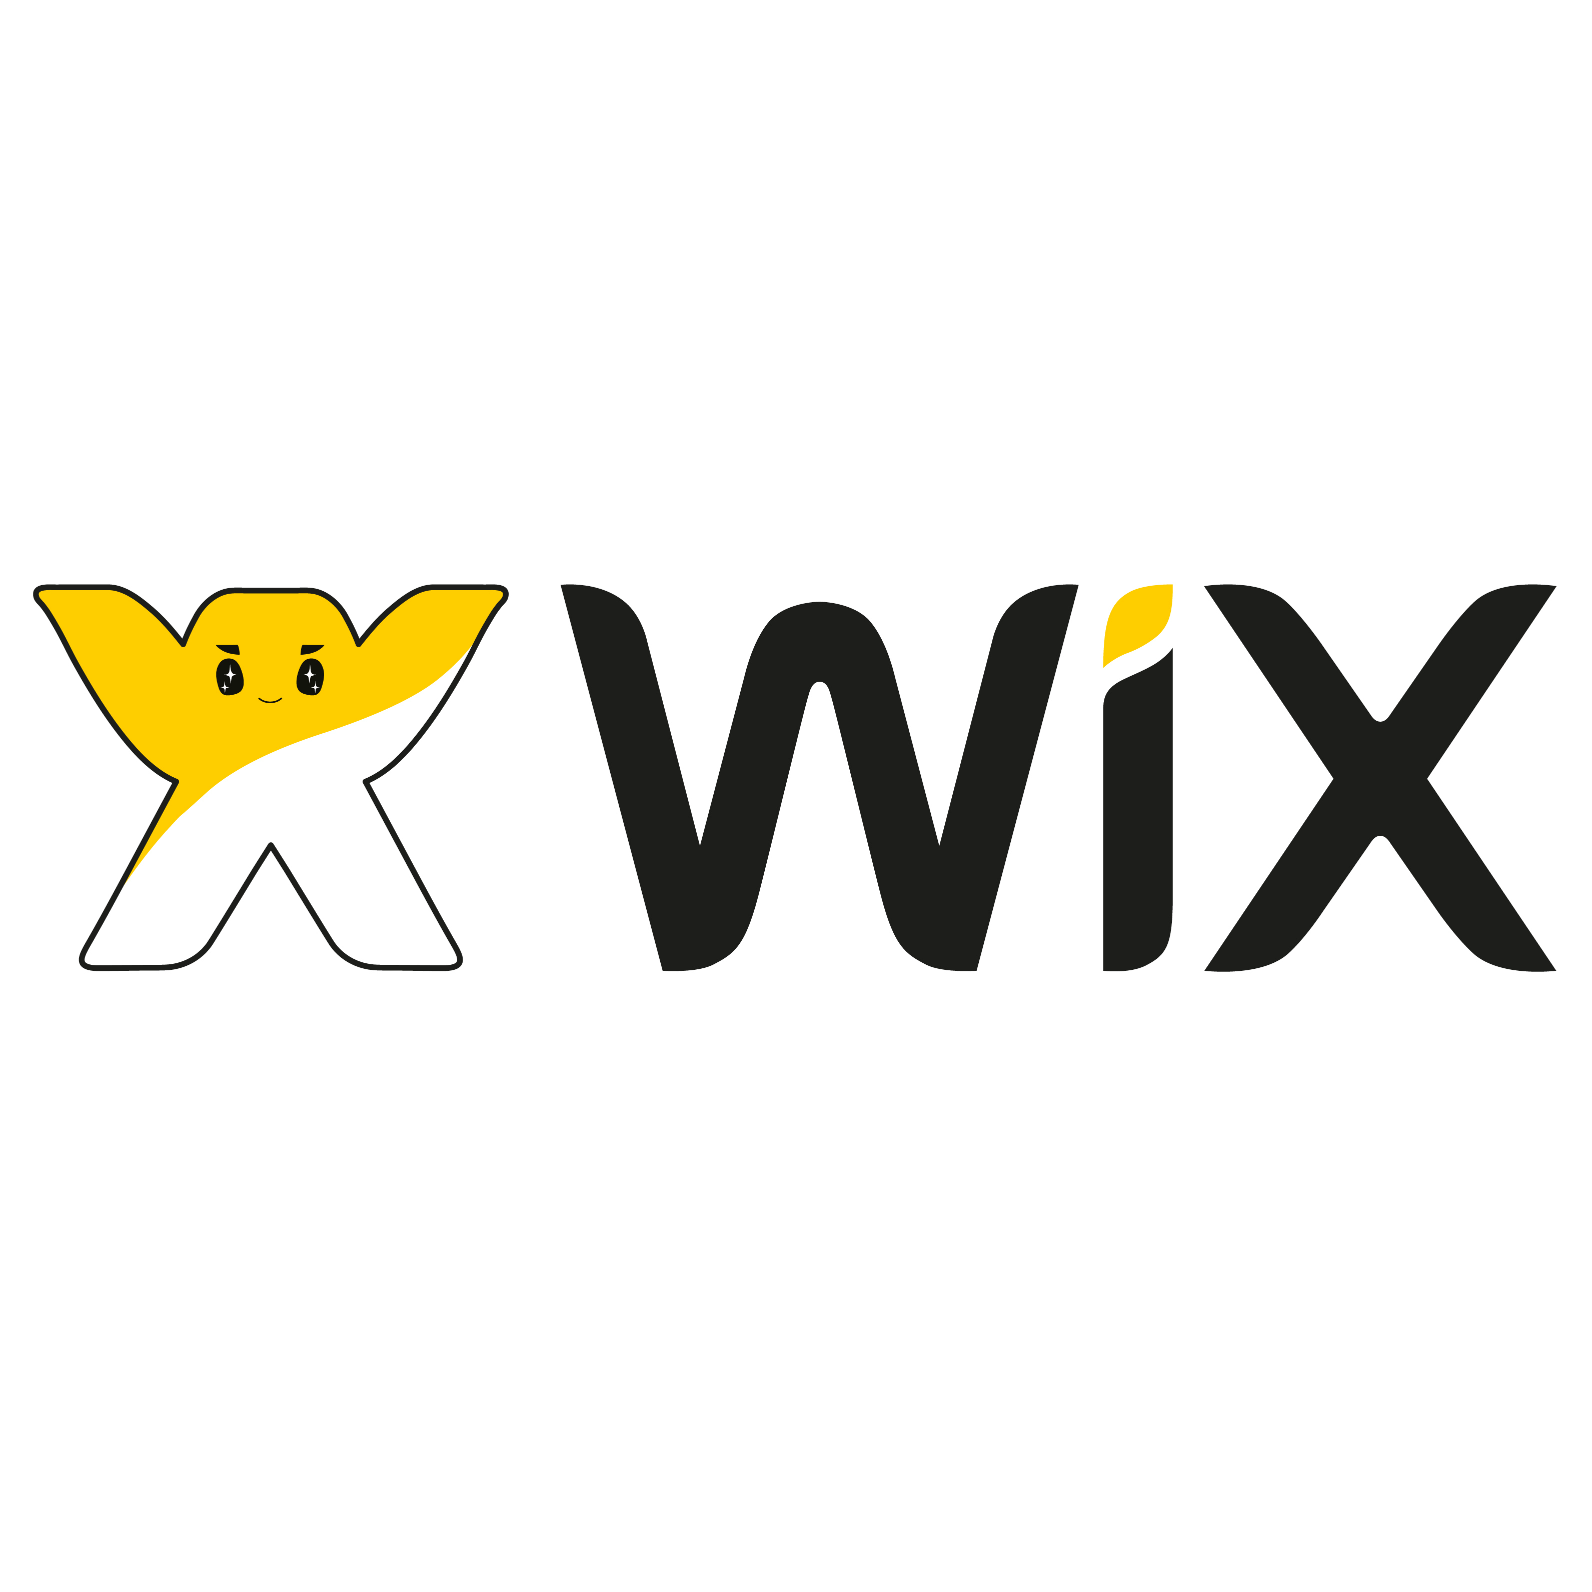 Not a coder? Wix can help